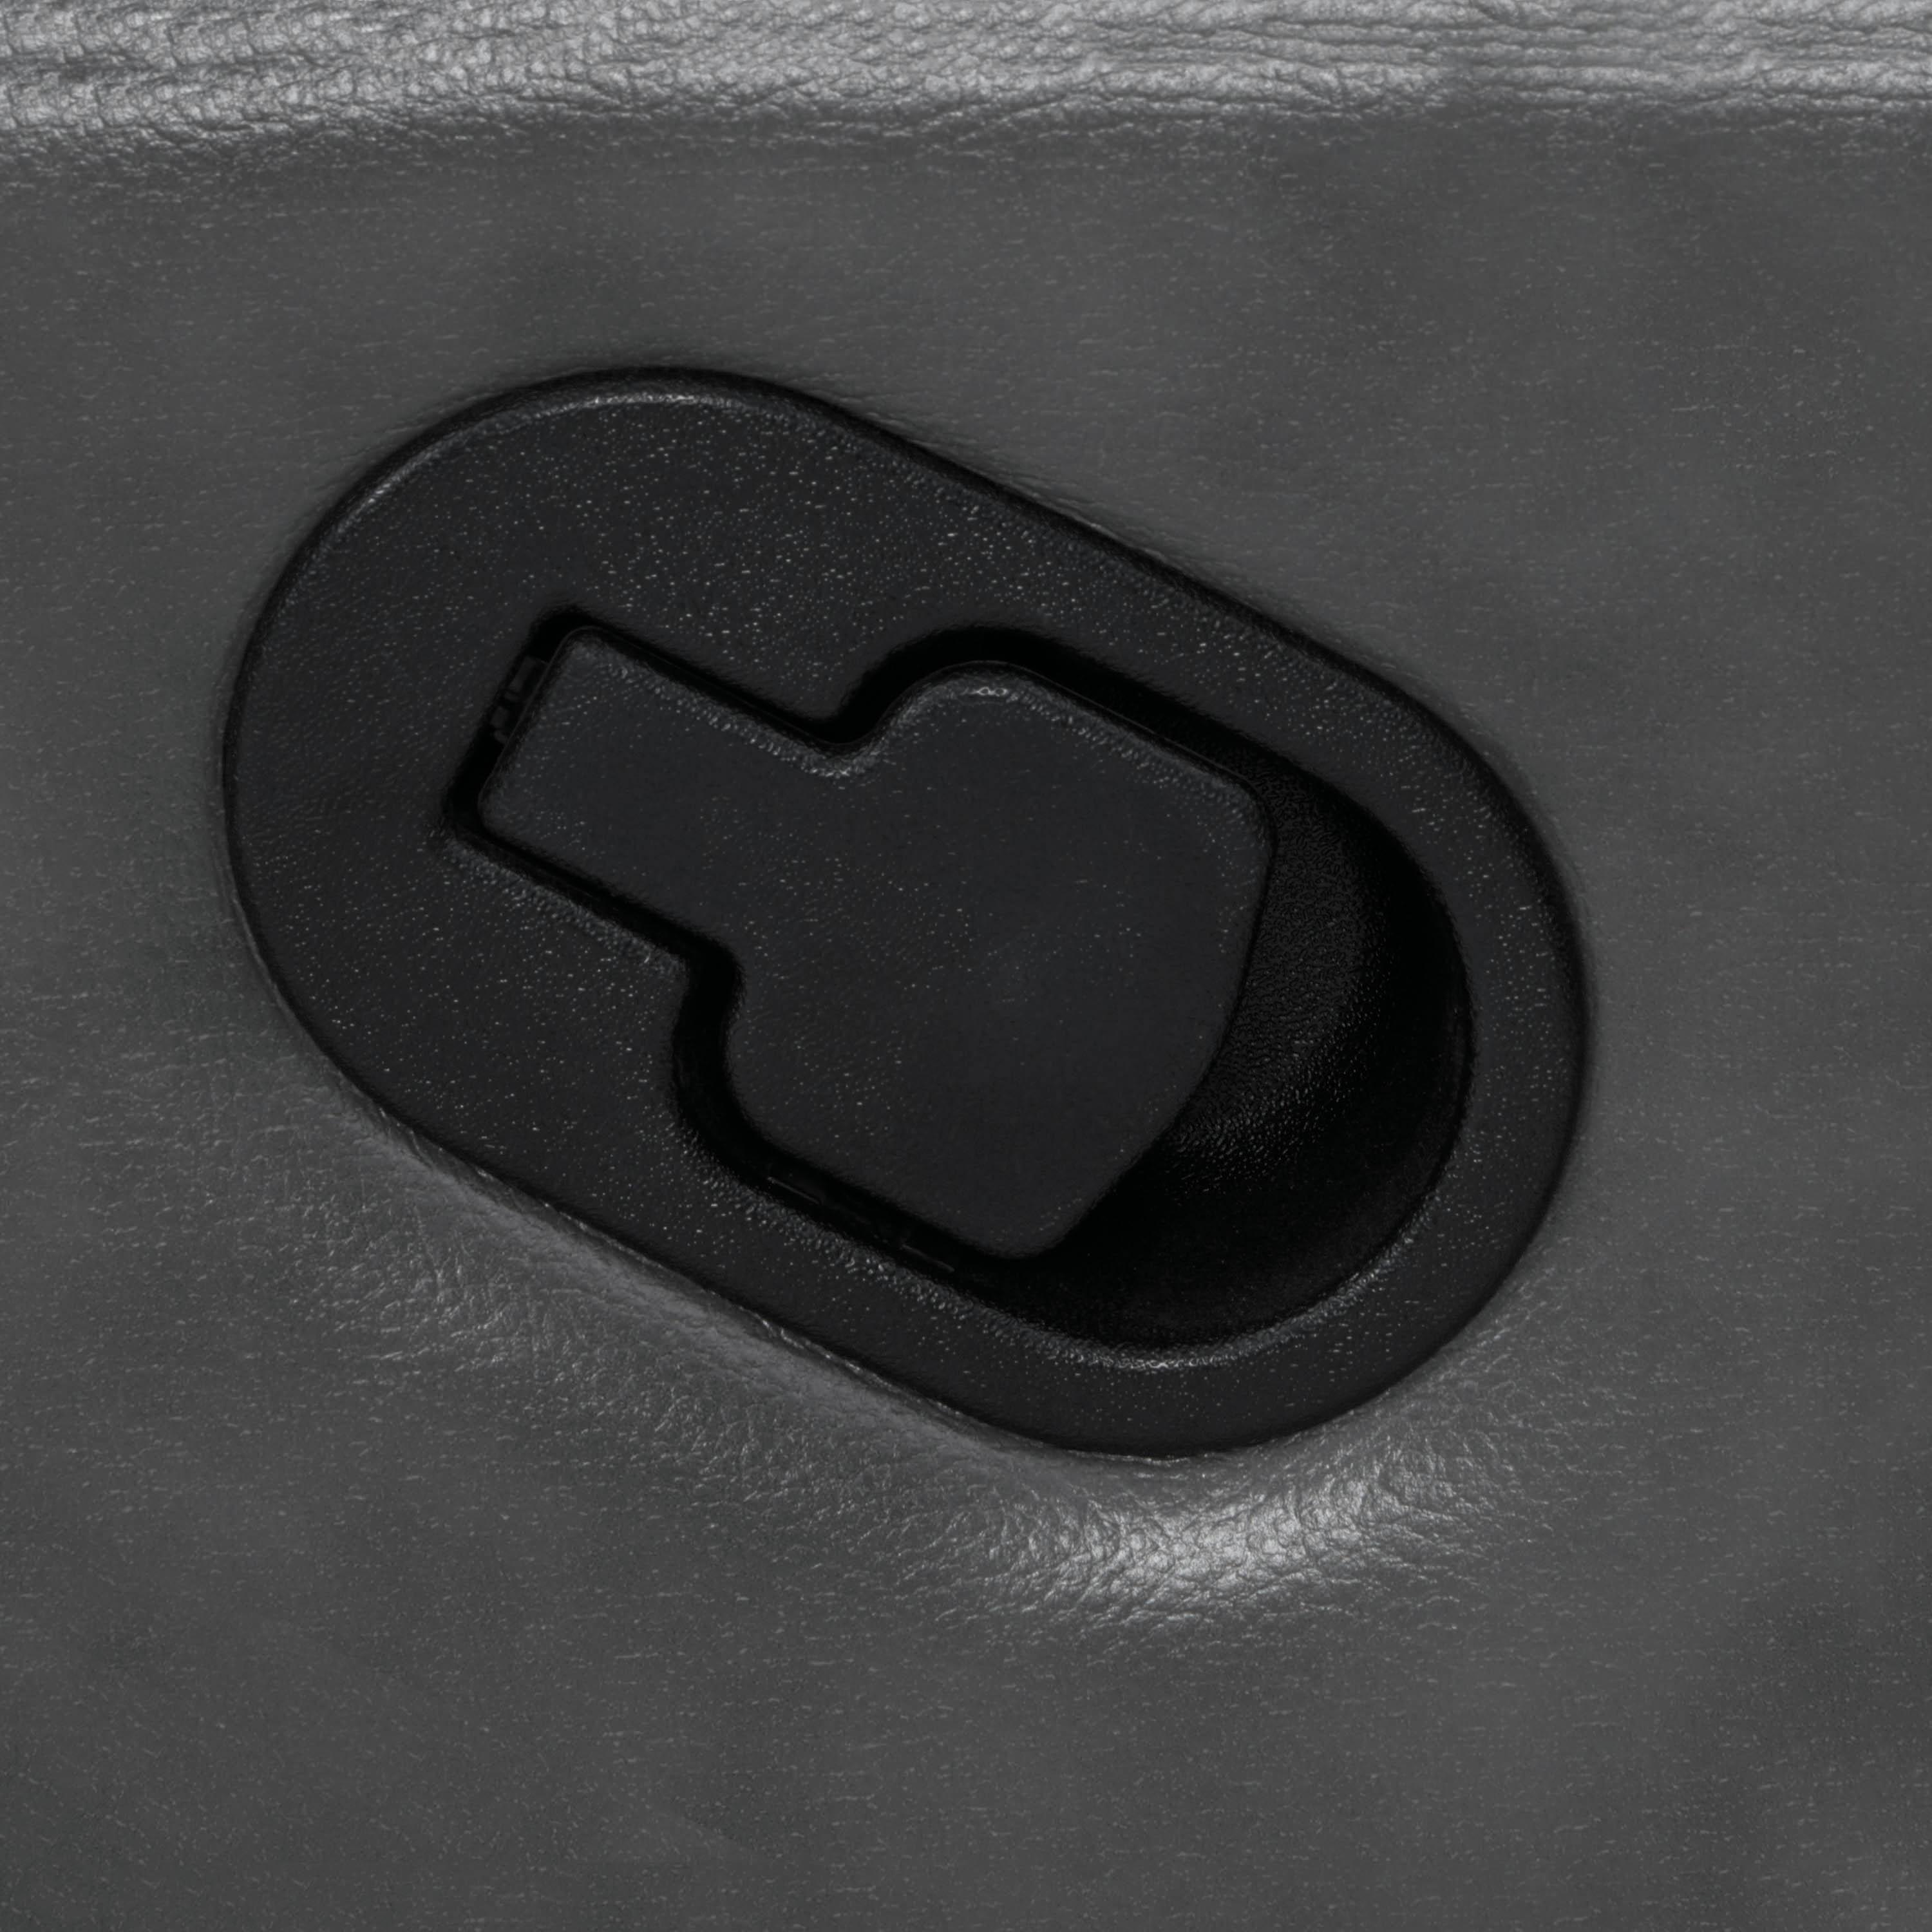 

                    
Buy Modern Gray Faux Leather Motion Sofa Set 2pcs Coaster 650354-S2 Conrad
